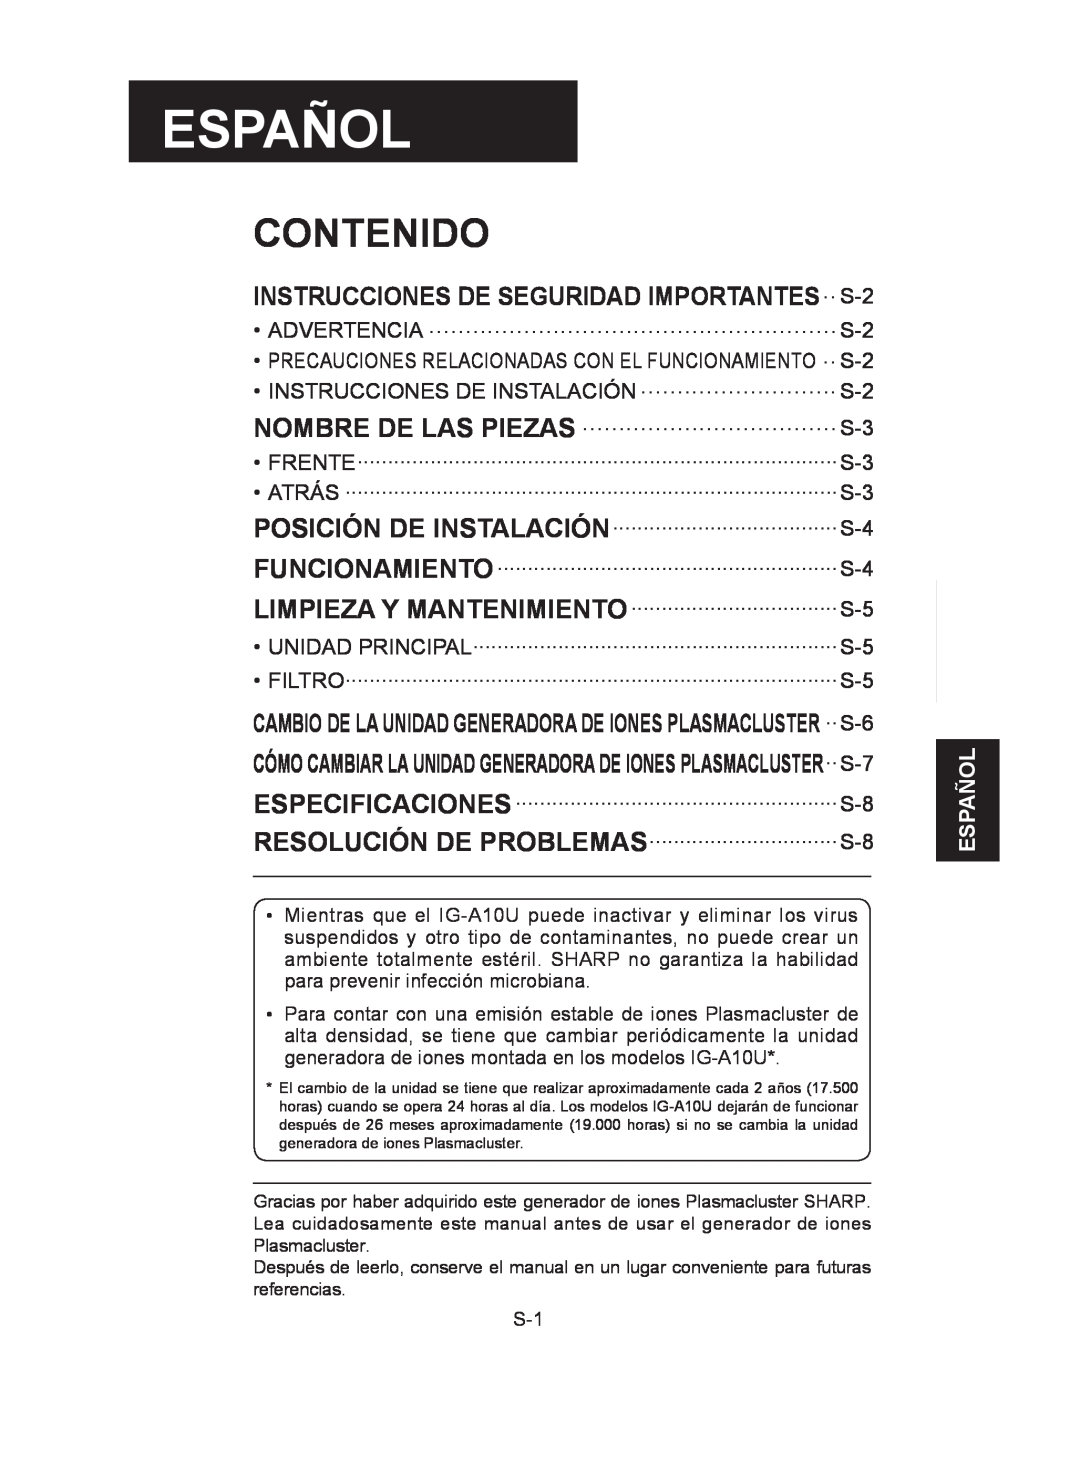 Sharp IG-A10U operation manual INSTRUCCIONES DE SEGURIDAD IMPORTANTES..S-2, Contenido, Español Français English 